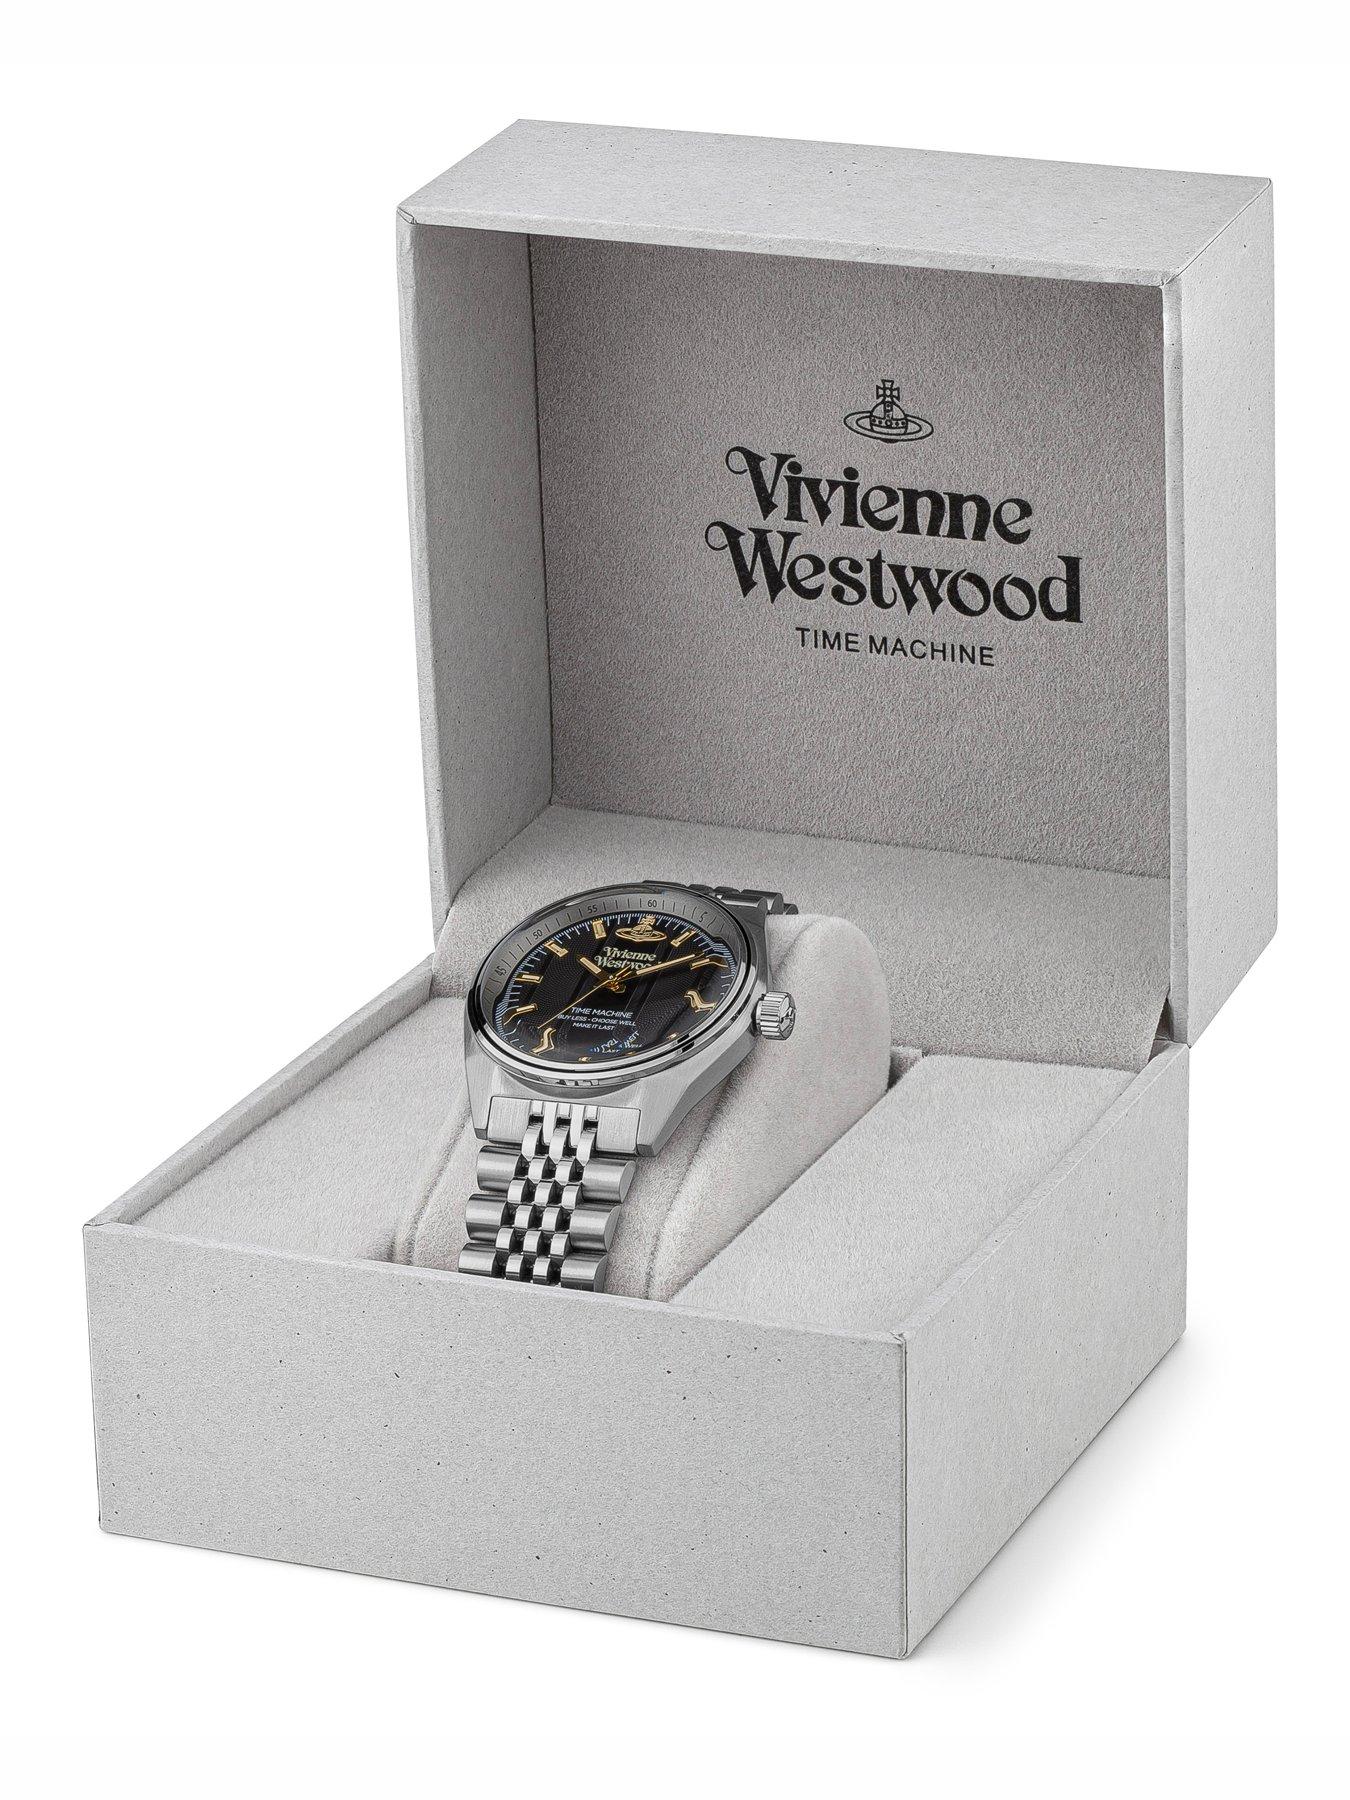 Jewellery & watches Men's Sydenham Quartz Watch with Black Dial & Stainless Steel Bracelet